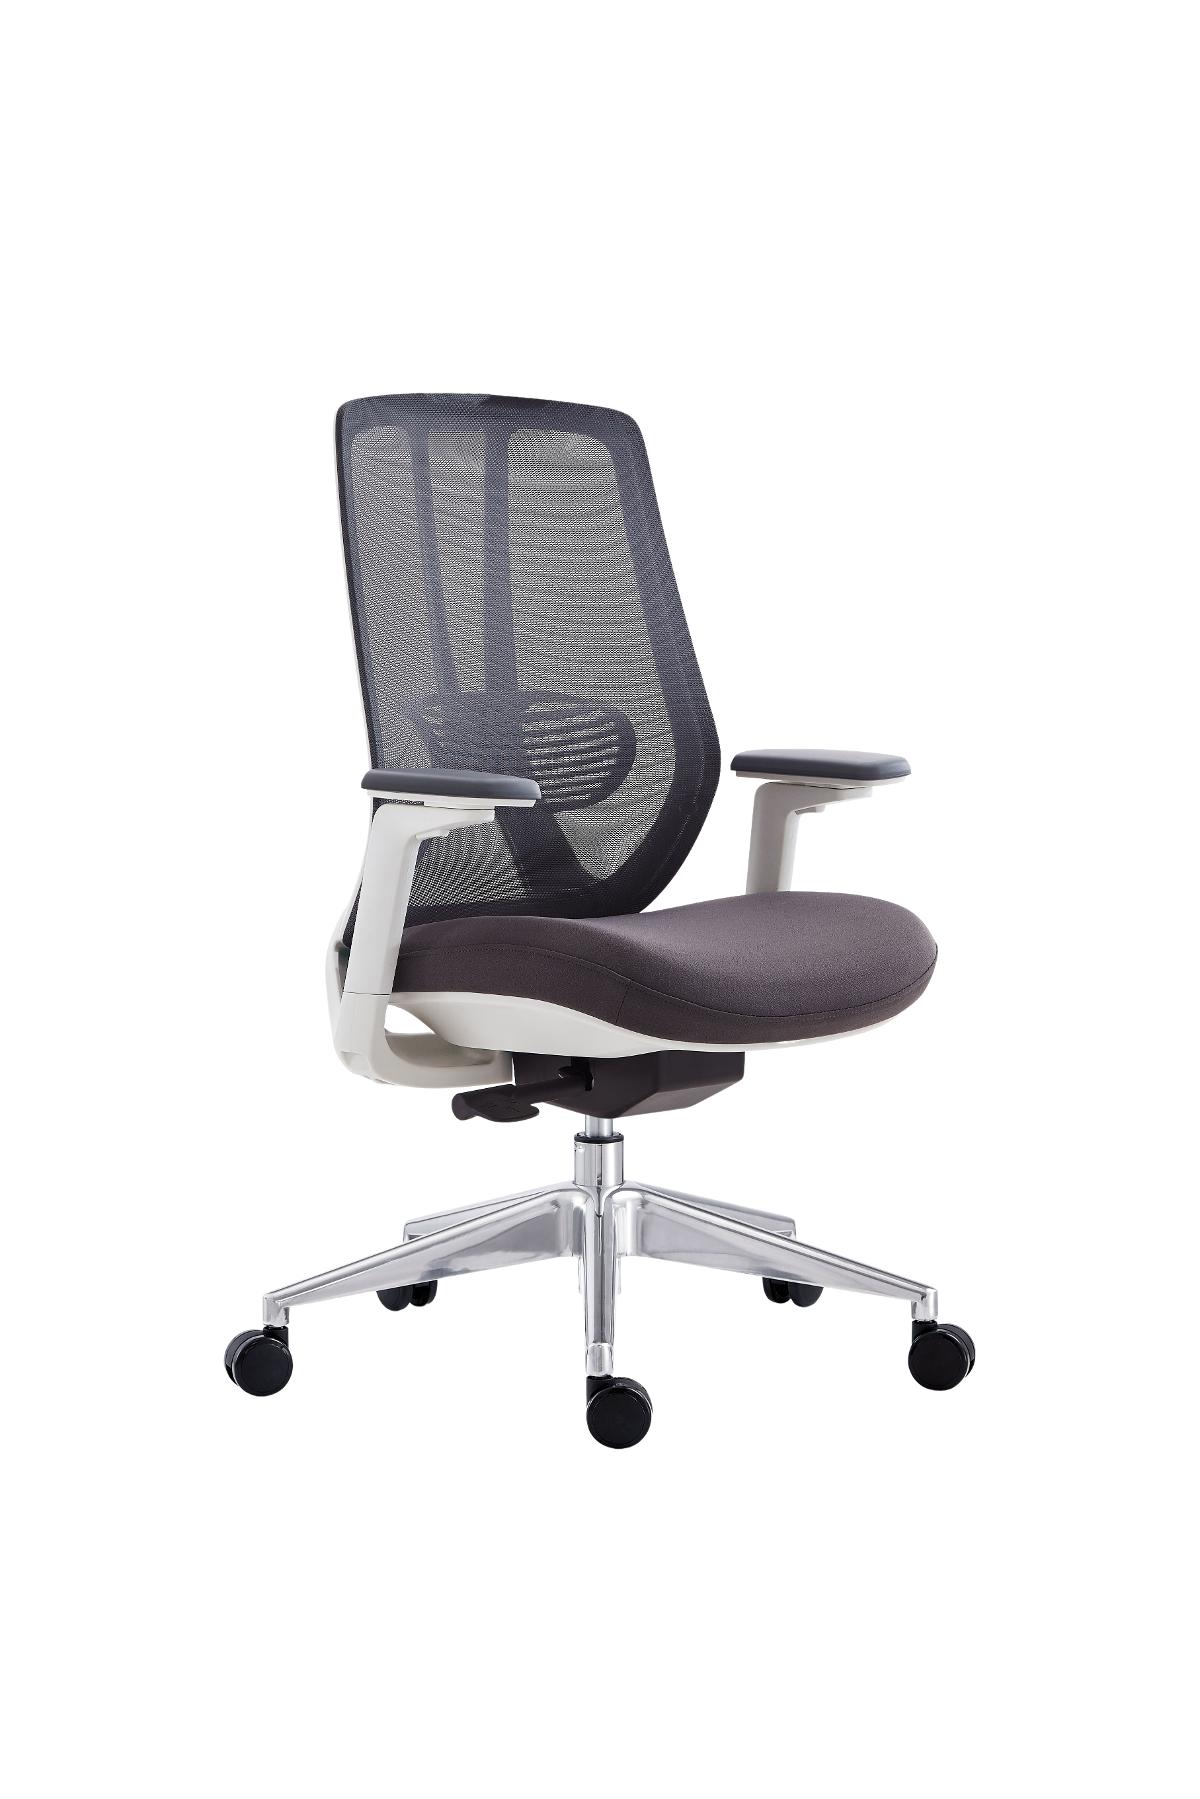 Super Chair เก้าอี้สำนักงาน รุ่น 7102-6 M White